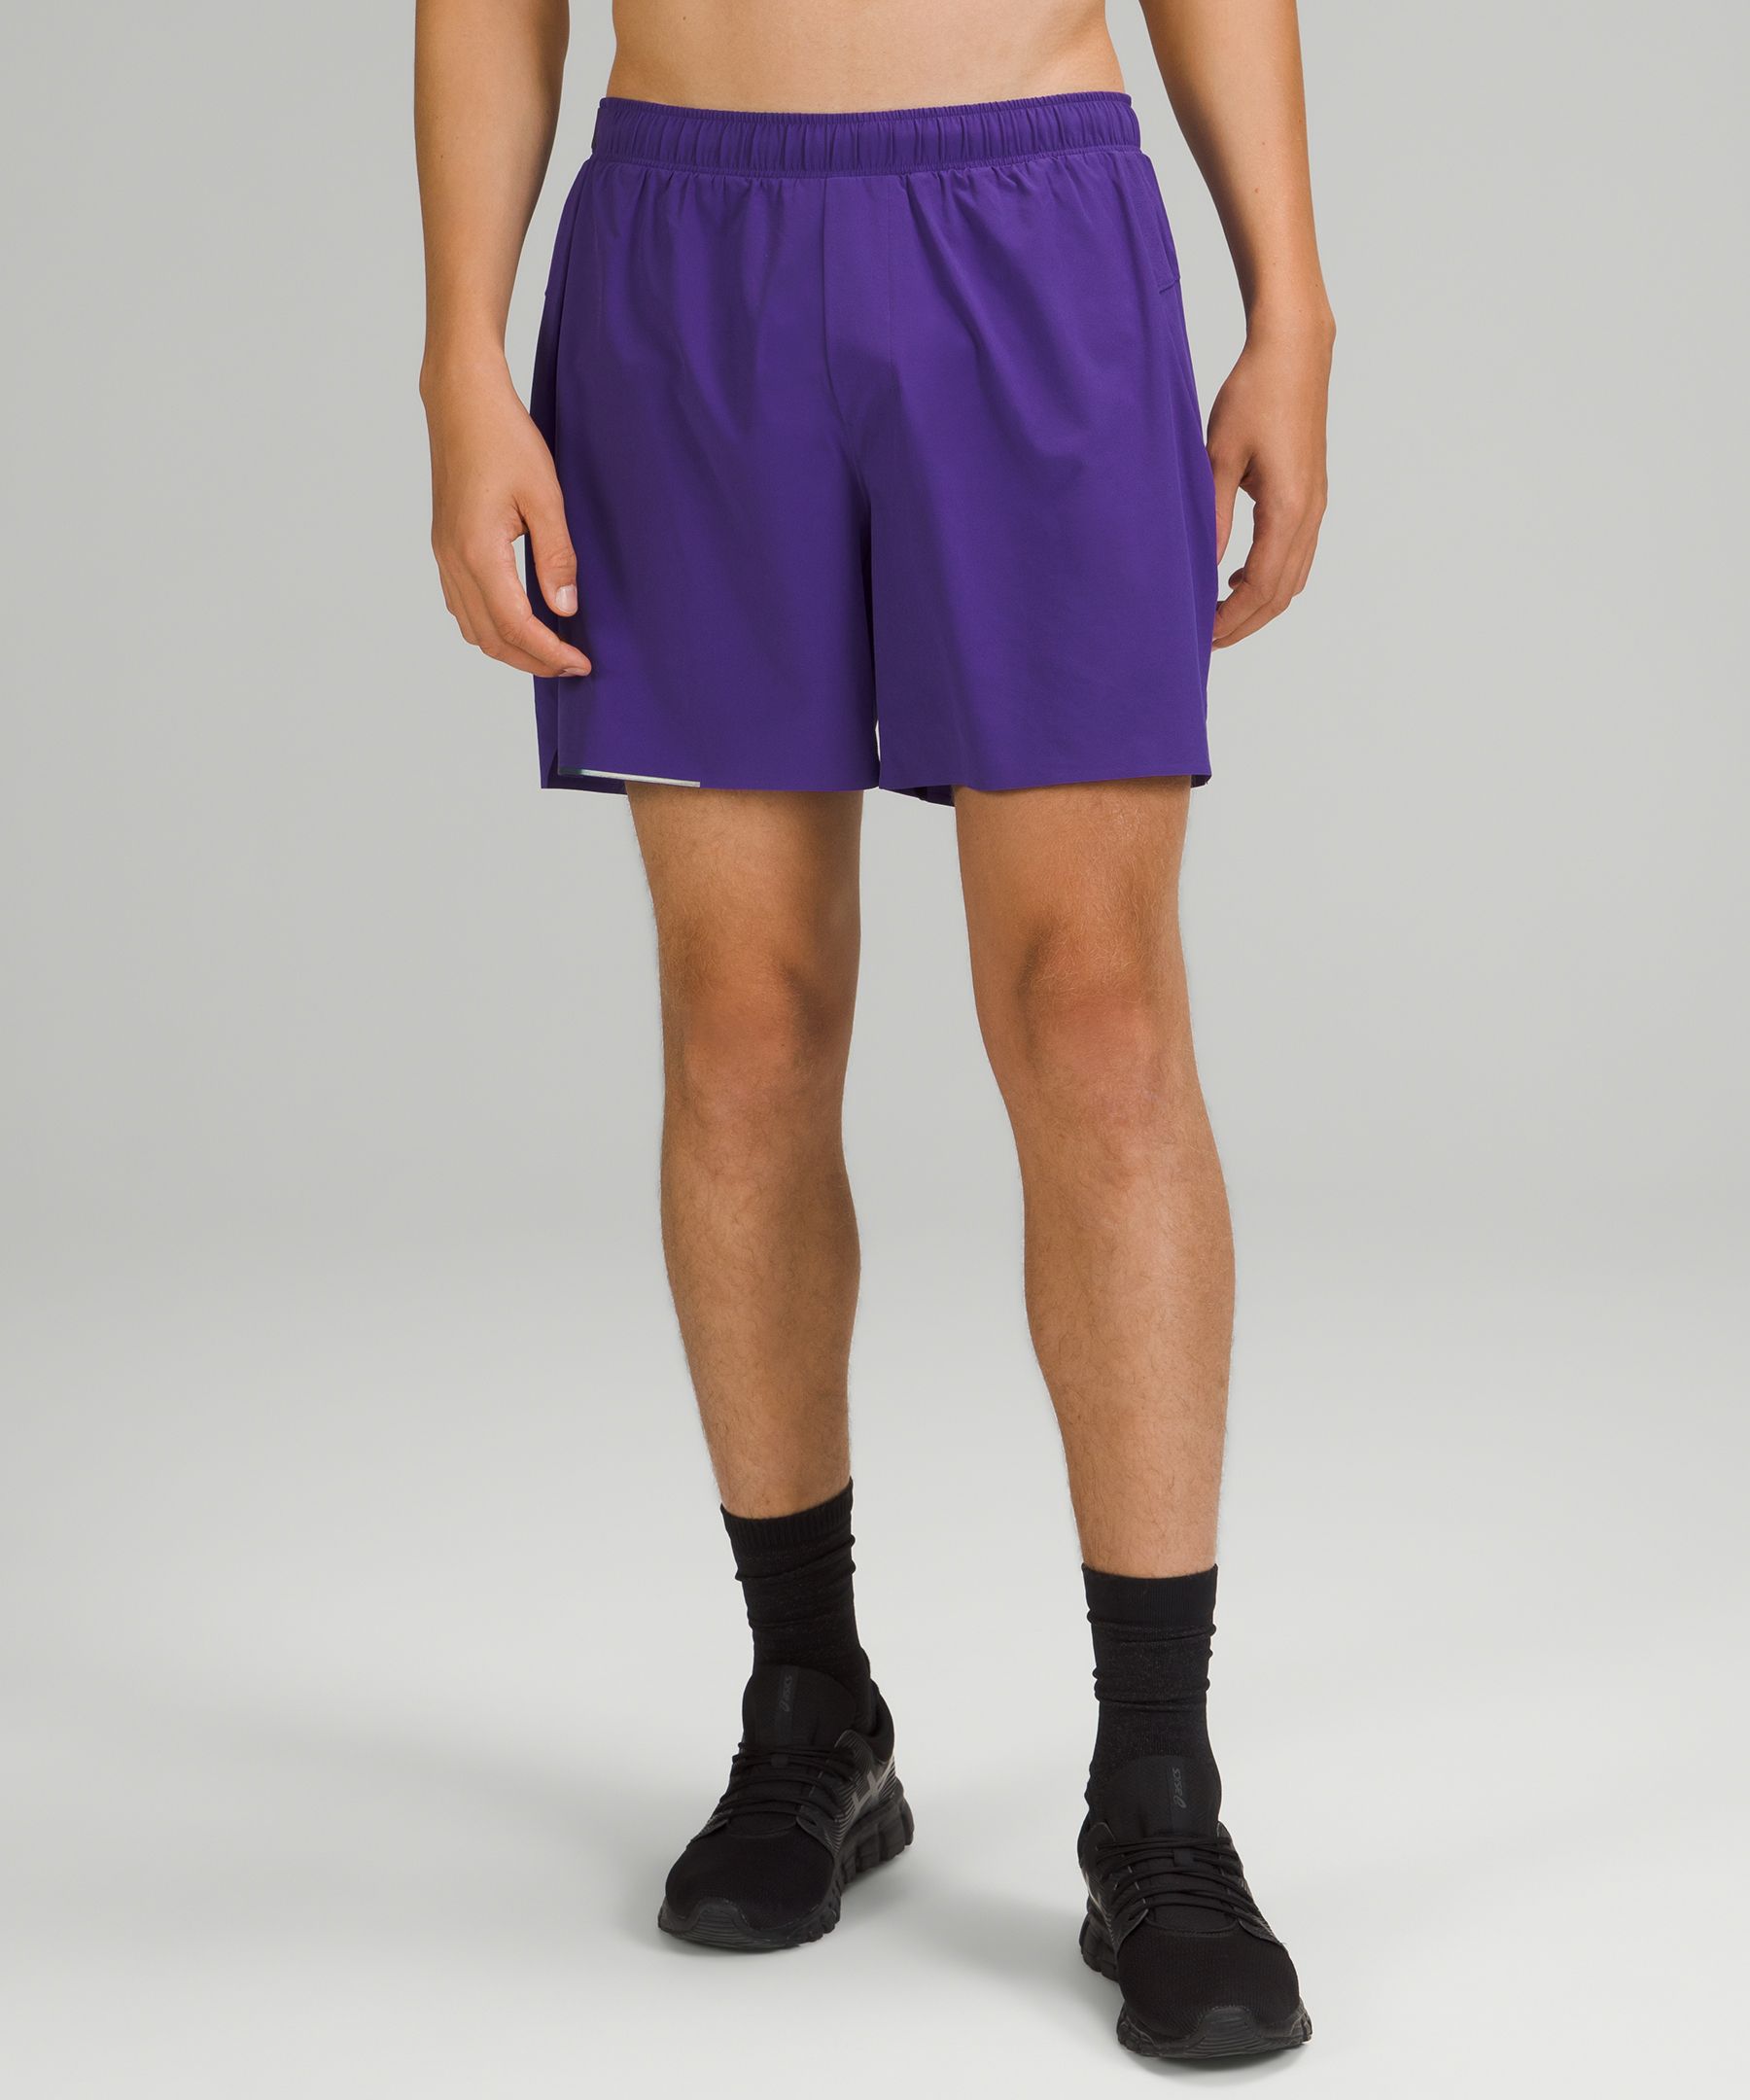 Lululemon Surge Lined Shorts 6" In Purple